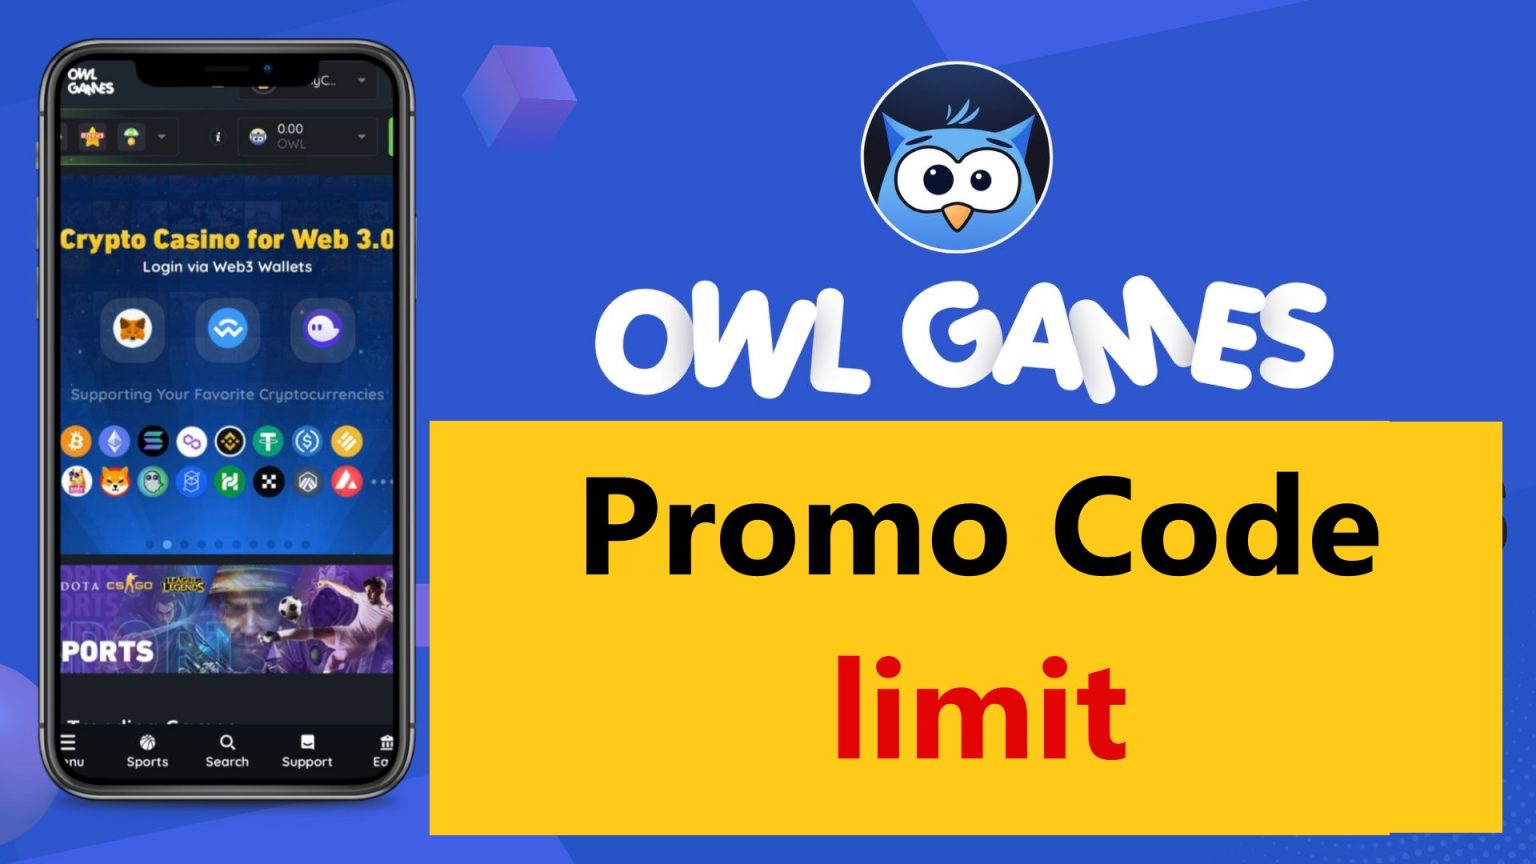 owl-games-referral-promo-code-bonus-coupon-free-sign-up-referrer-discount